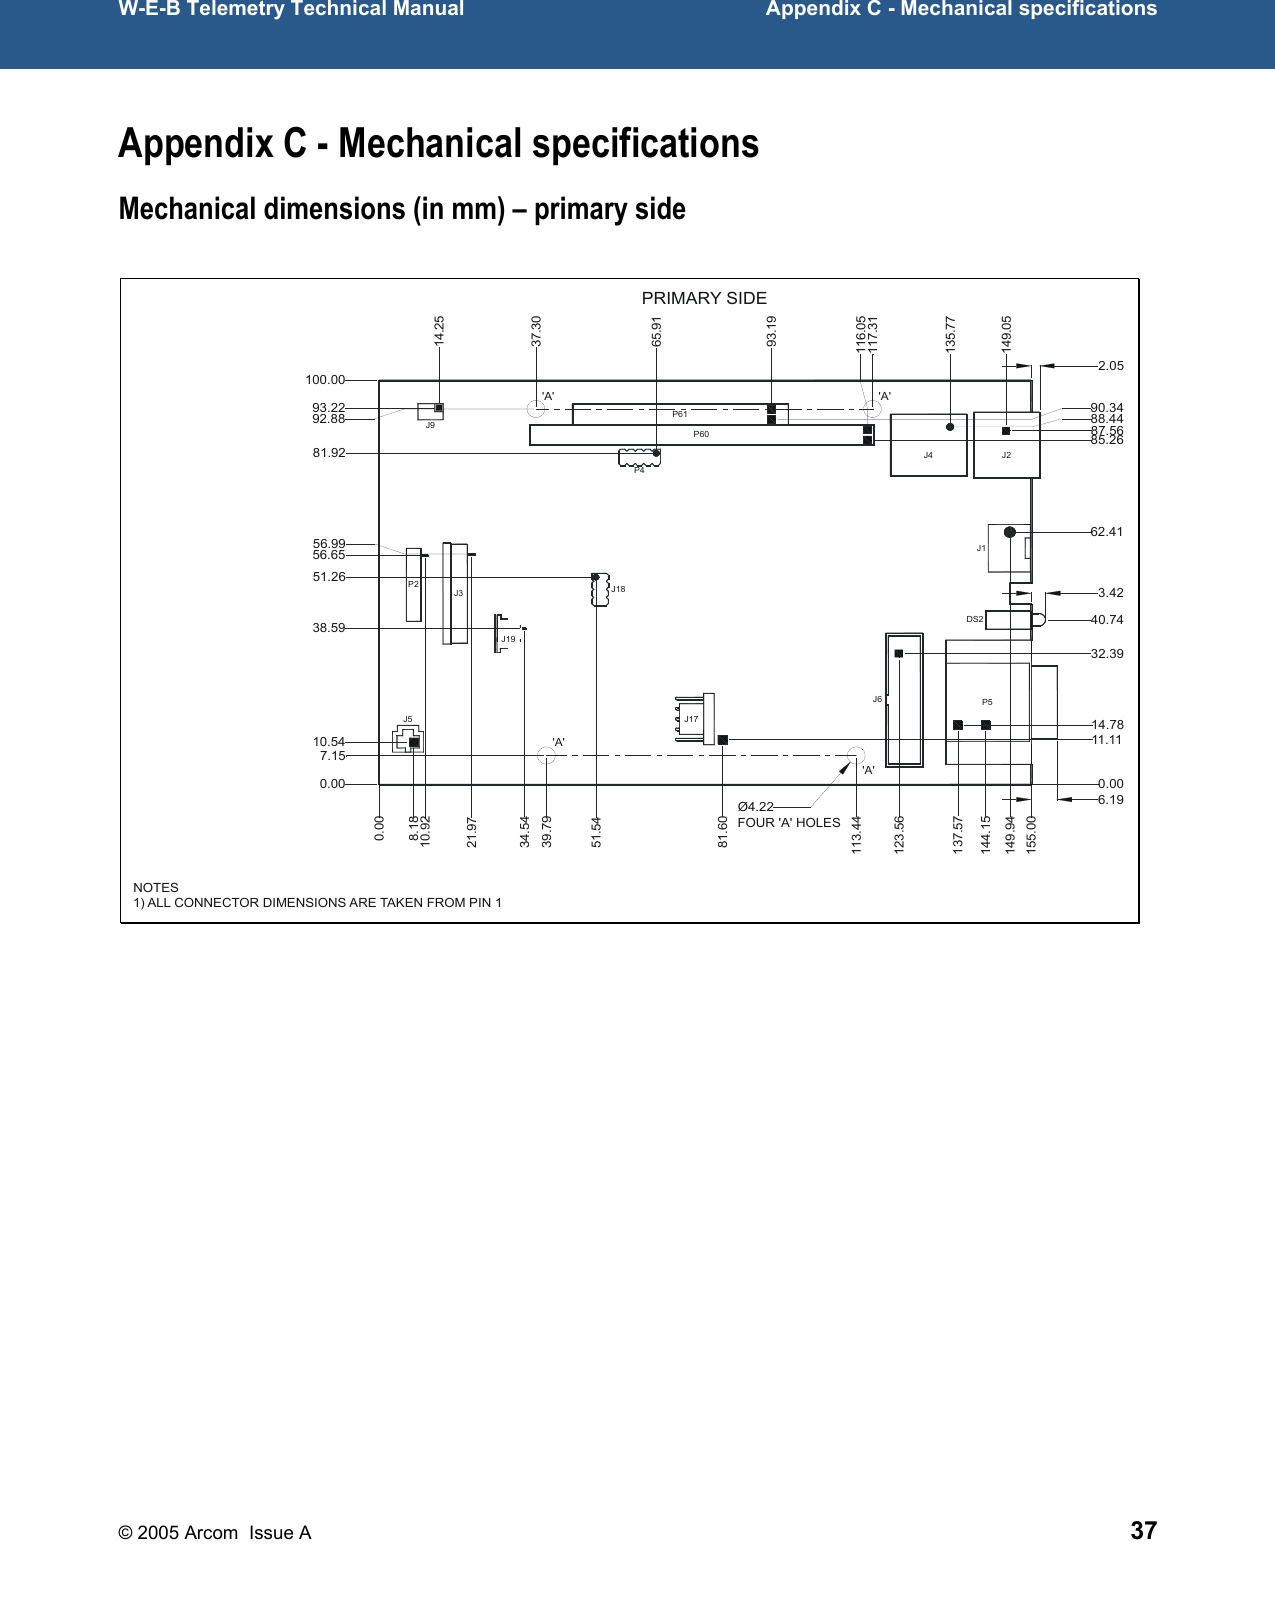  W-E-B Telemetry Technical Manual  Appendix C - Mechanical specifications Appendix C - Mechanical specifications  Mechanical dimensions (in mm) – primary side J1J2J3J4J5J6J9J17J18J19P2P4P5P60P61NOTES1) ALL CONNECTOR DIMENSIONS ARE TAKEN FROM PIN 1PRIMARY SIDE0.008.1810.9239.7951.5434.5421.9781.60113.44123.56137.57144.15155.00149.940.007.150.0014.7832.3962.4156.6551.2638.5956.9910.54DS240.743.42100.0093.2292.88 87.5688.4481.9214.2537.3065.91117.3193.19116.05135.77149.052.056.1985.2690.3411.11&apos;A&apos; &apos;A&apos;&apos;A&apos;&apos;A&apos;Ø4.22FOUR &apos;A&apos; HOLES © 2005 Arcom  Issue A 37 